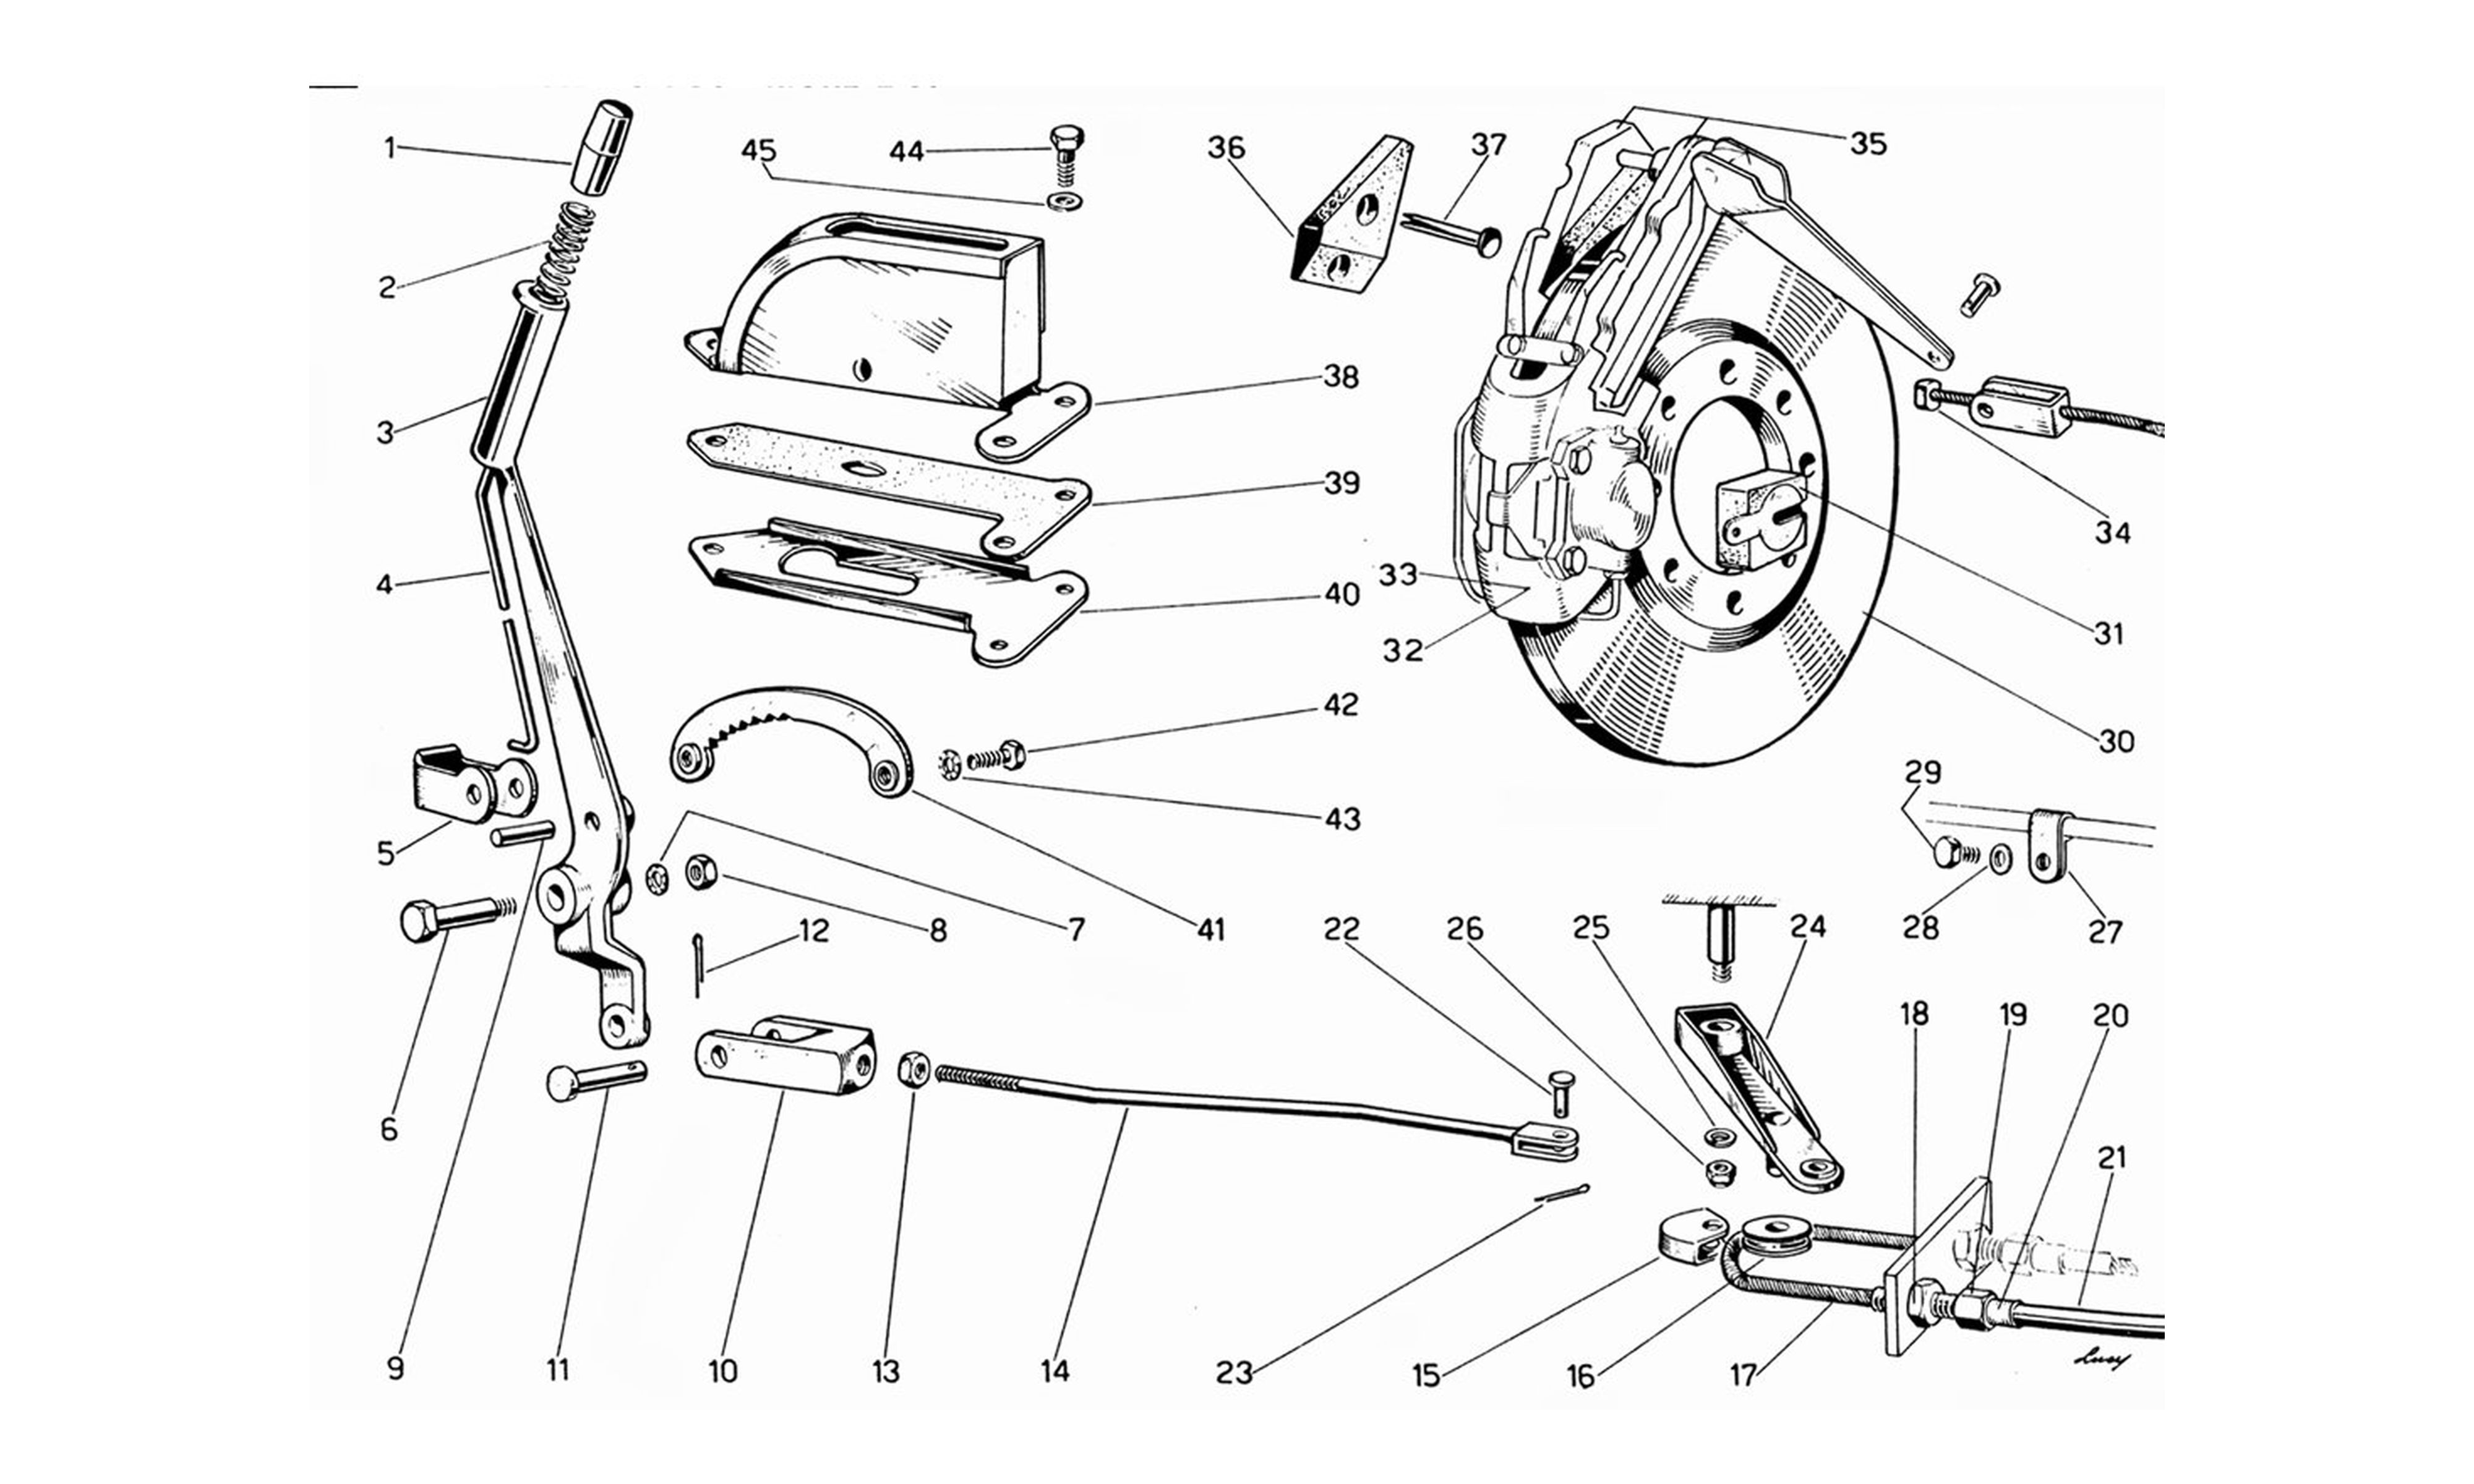 Schematic: Rear Brakes and Handbrake